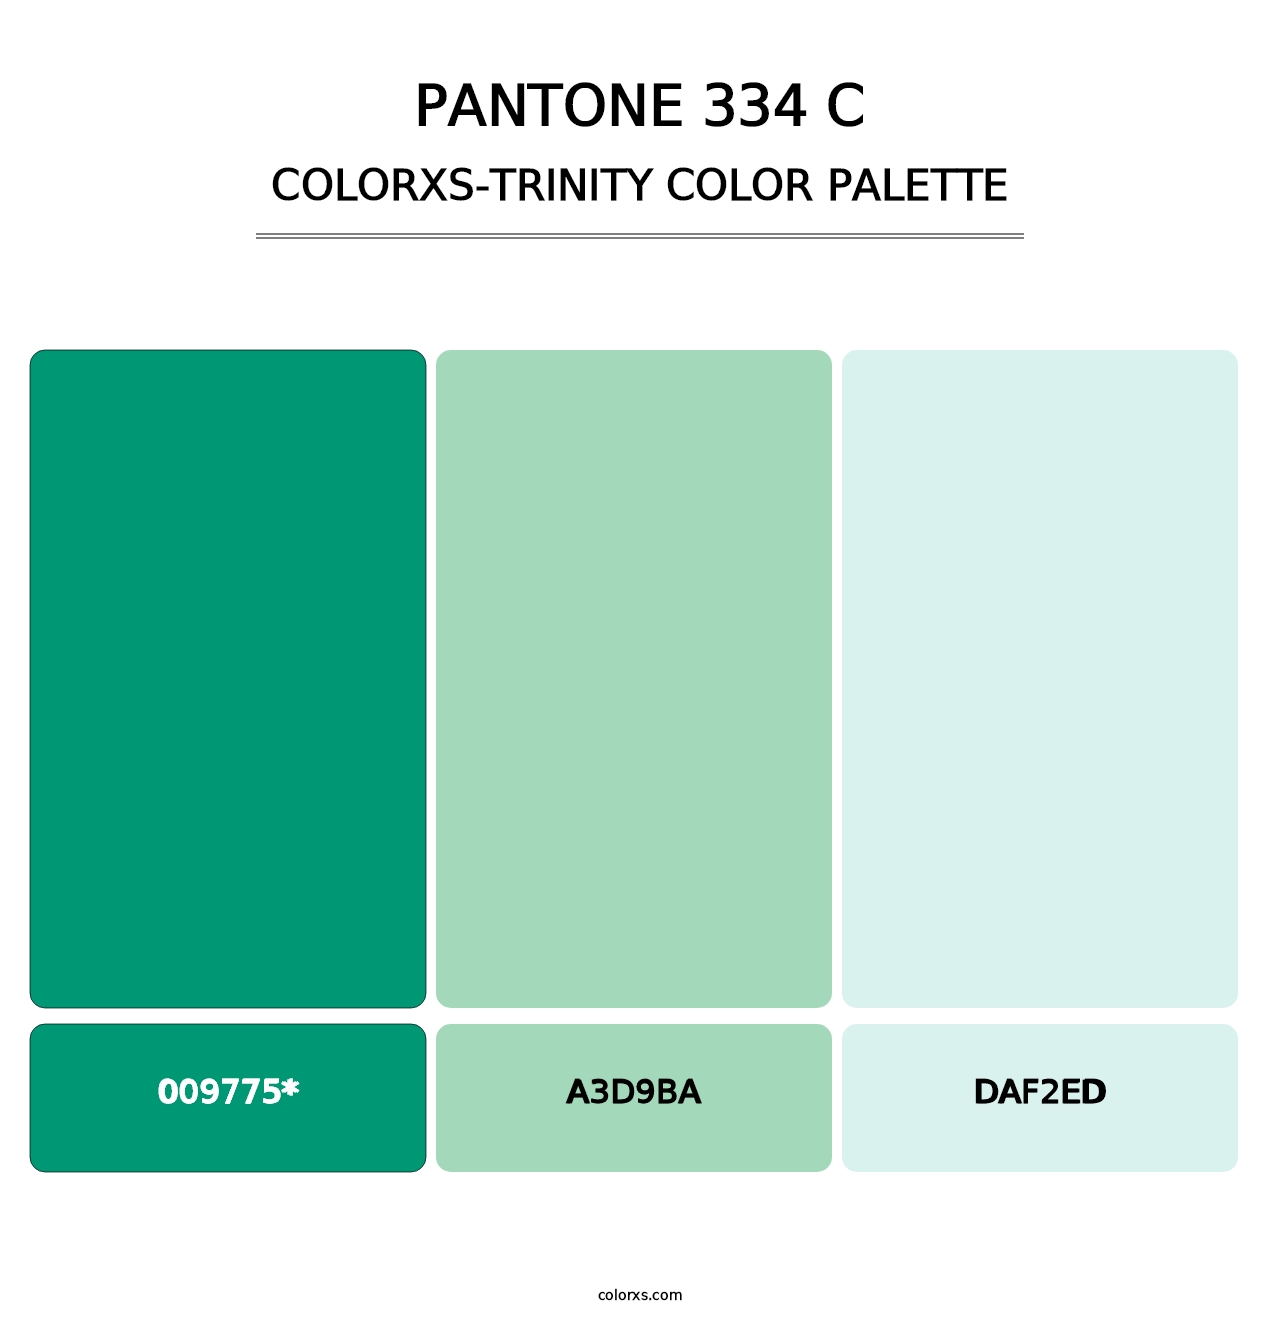 PANTONE 334 C - Colorxs Trinity Palette